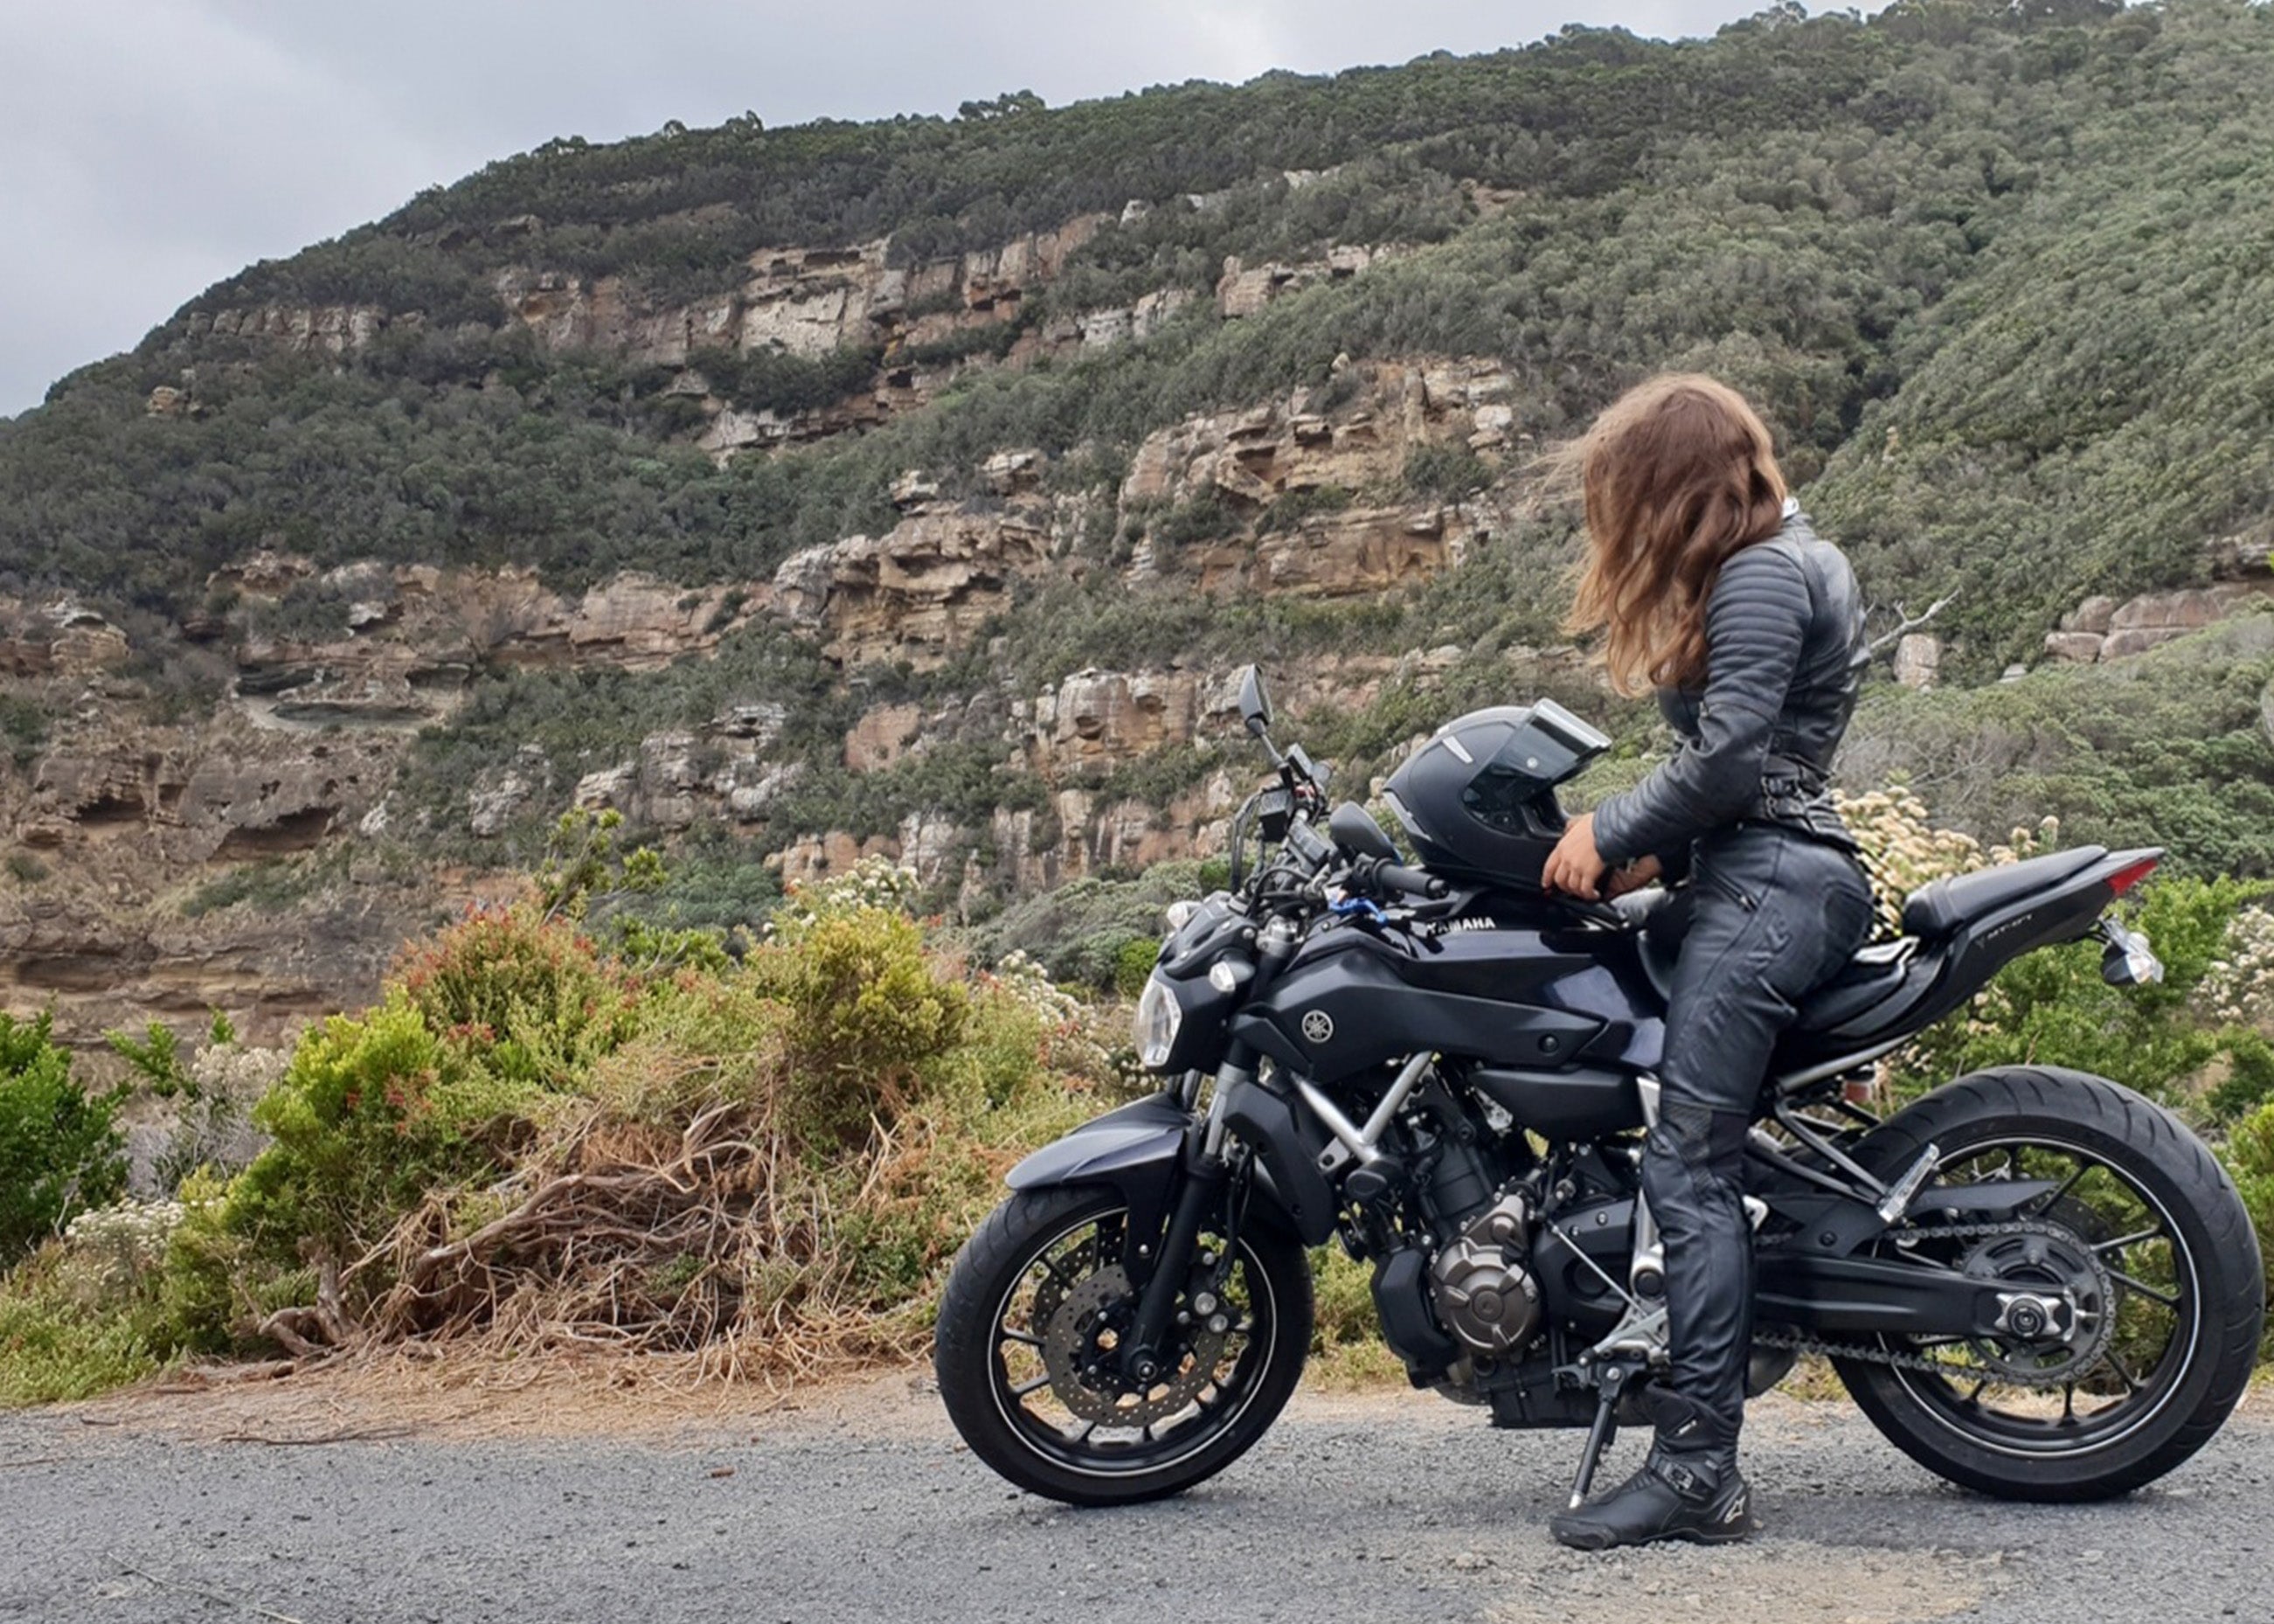 Cassie on her Yamaha motorcycle, Tasmania, Australia